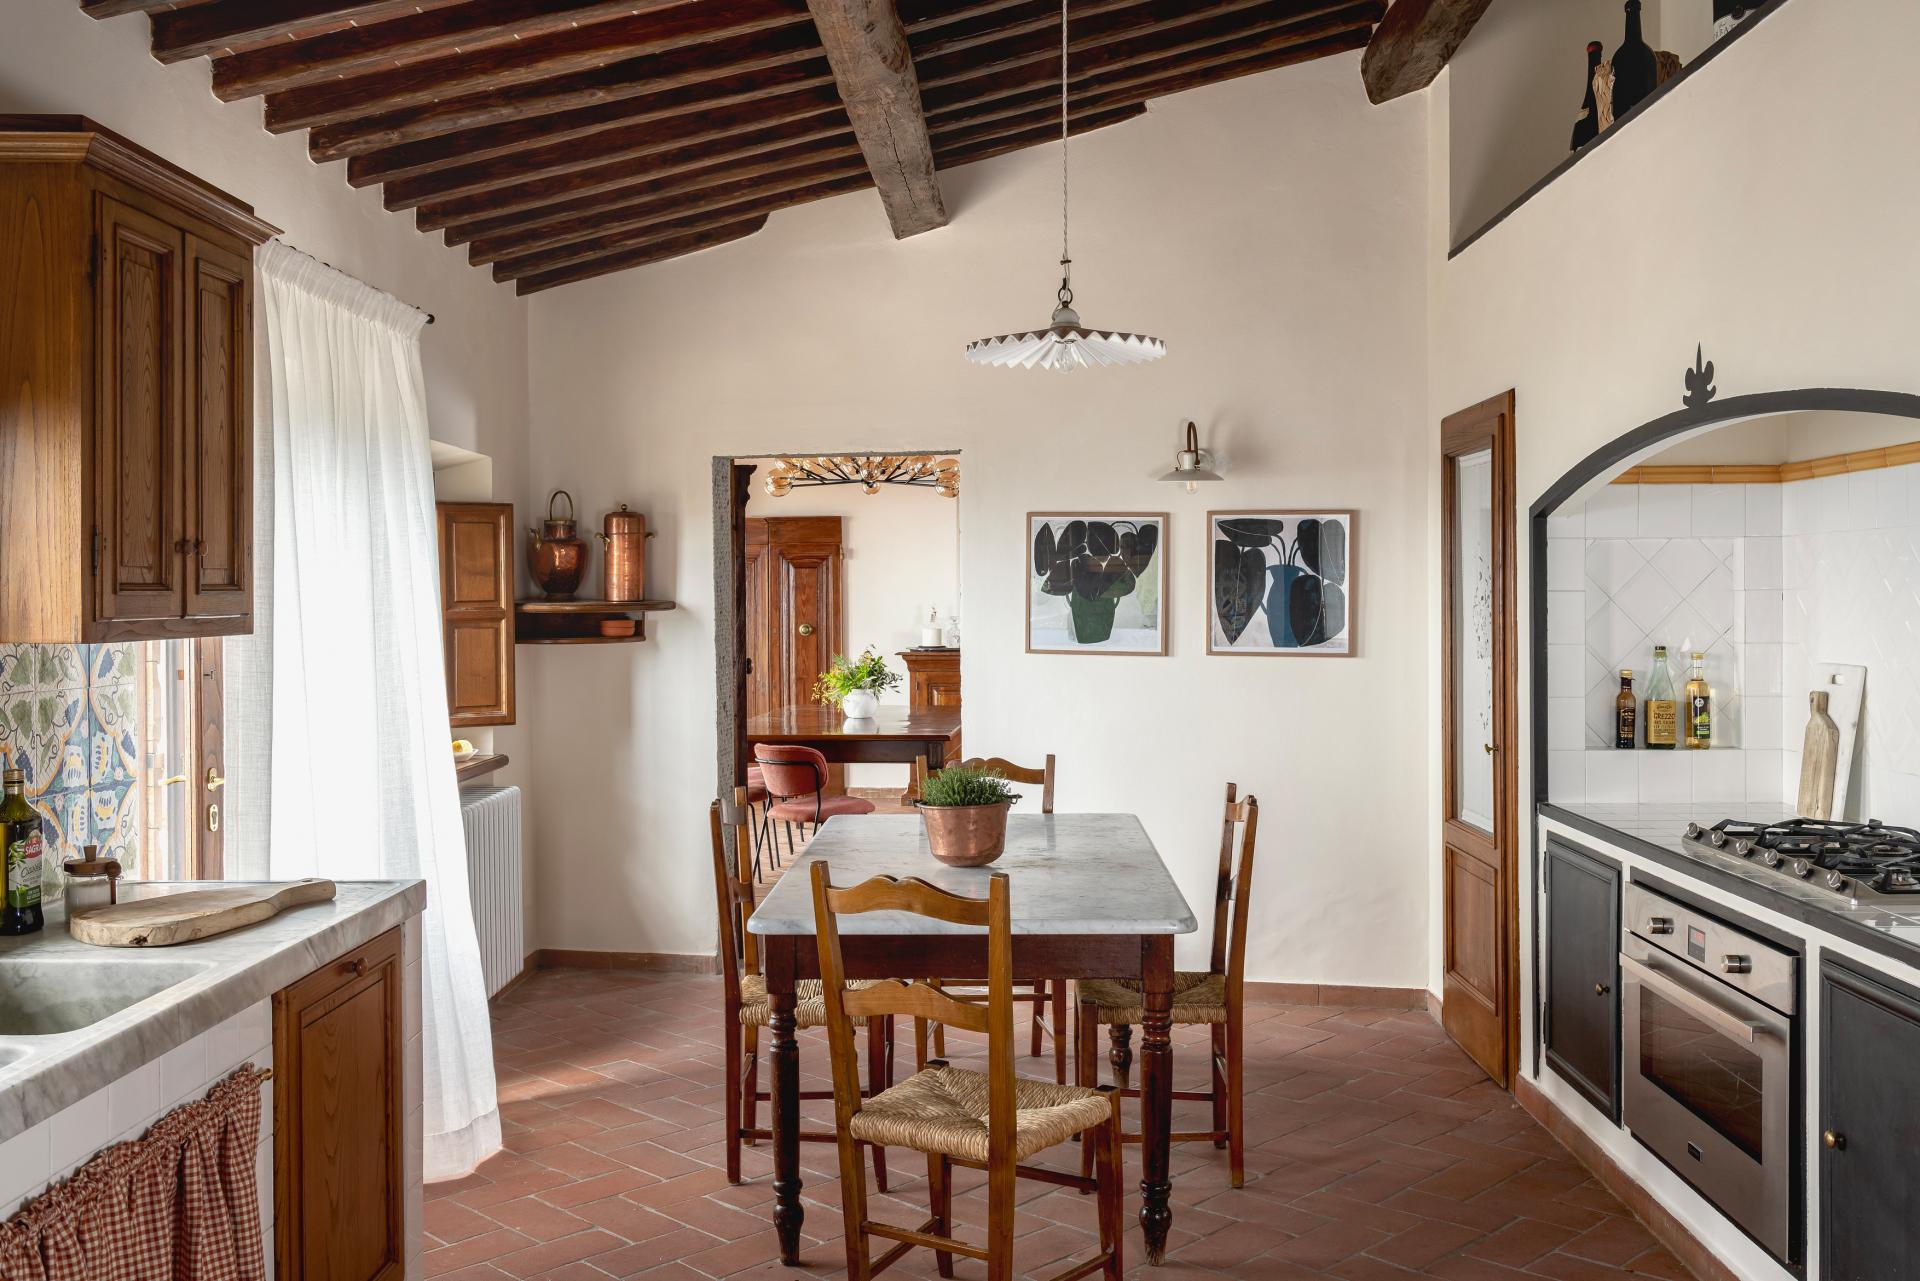 Tuscany Treasure: Old Italian Farmhouse Turned Into a Stunning Holiday Home